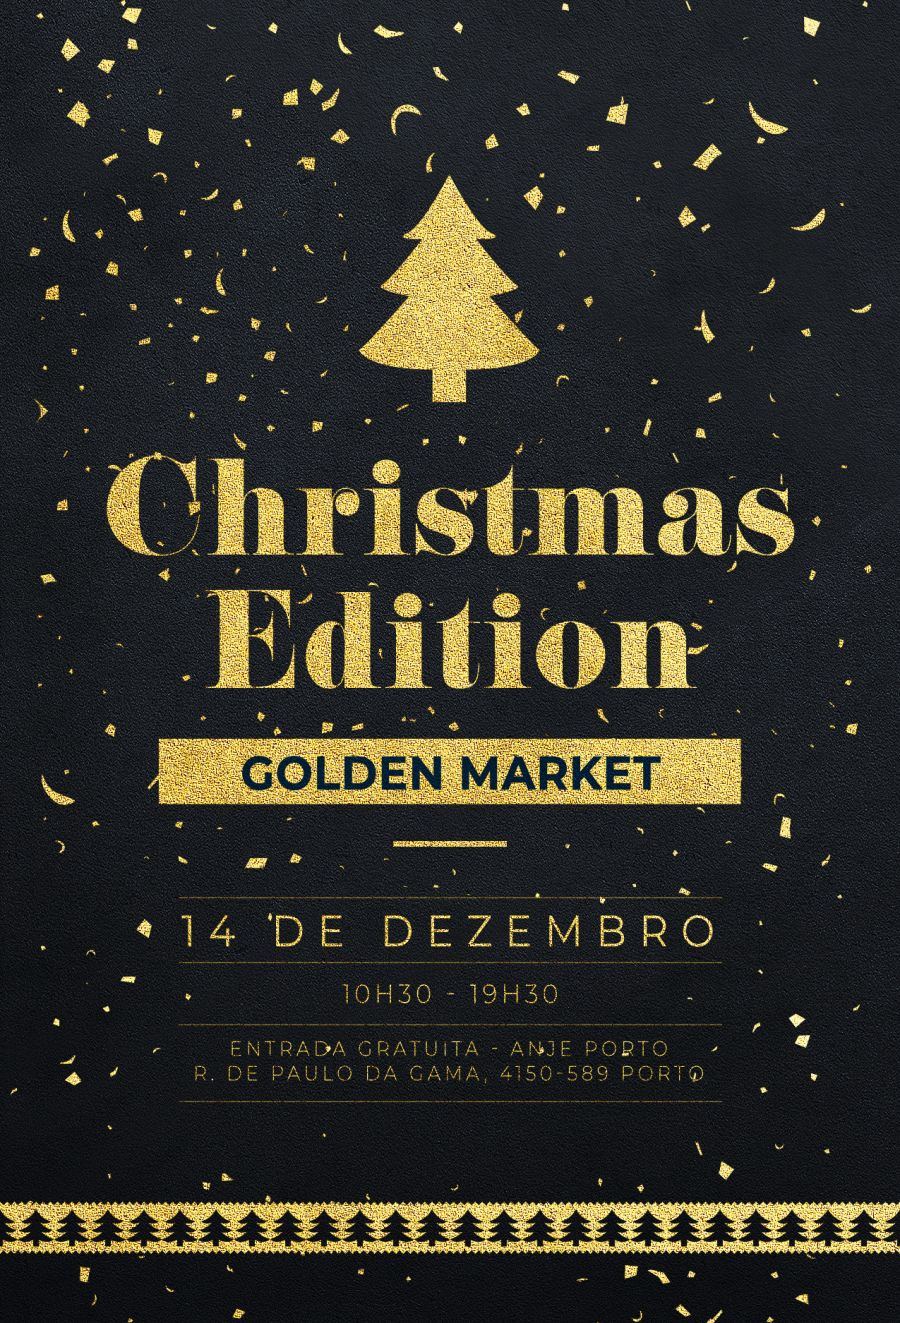 Golden Market - Christmas Edition